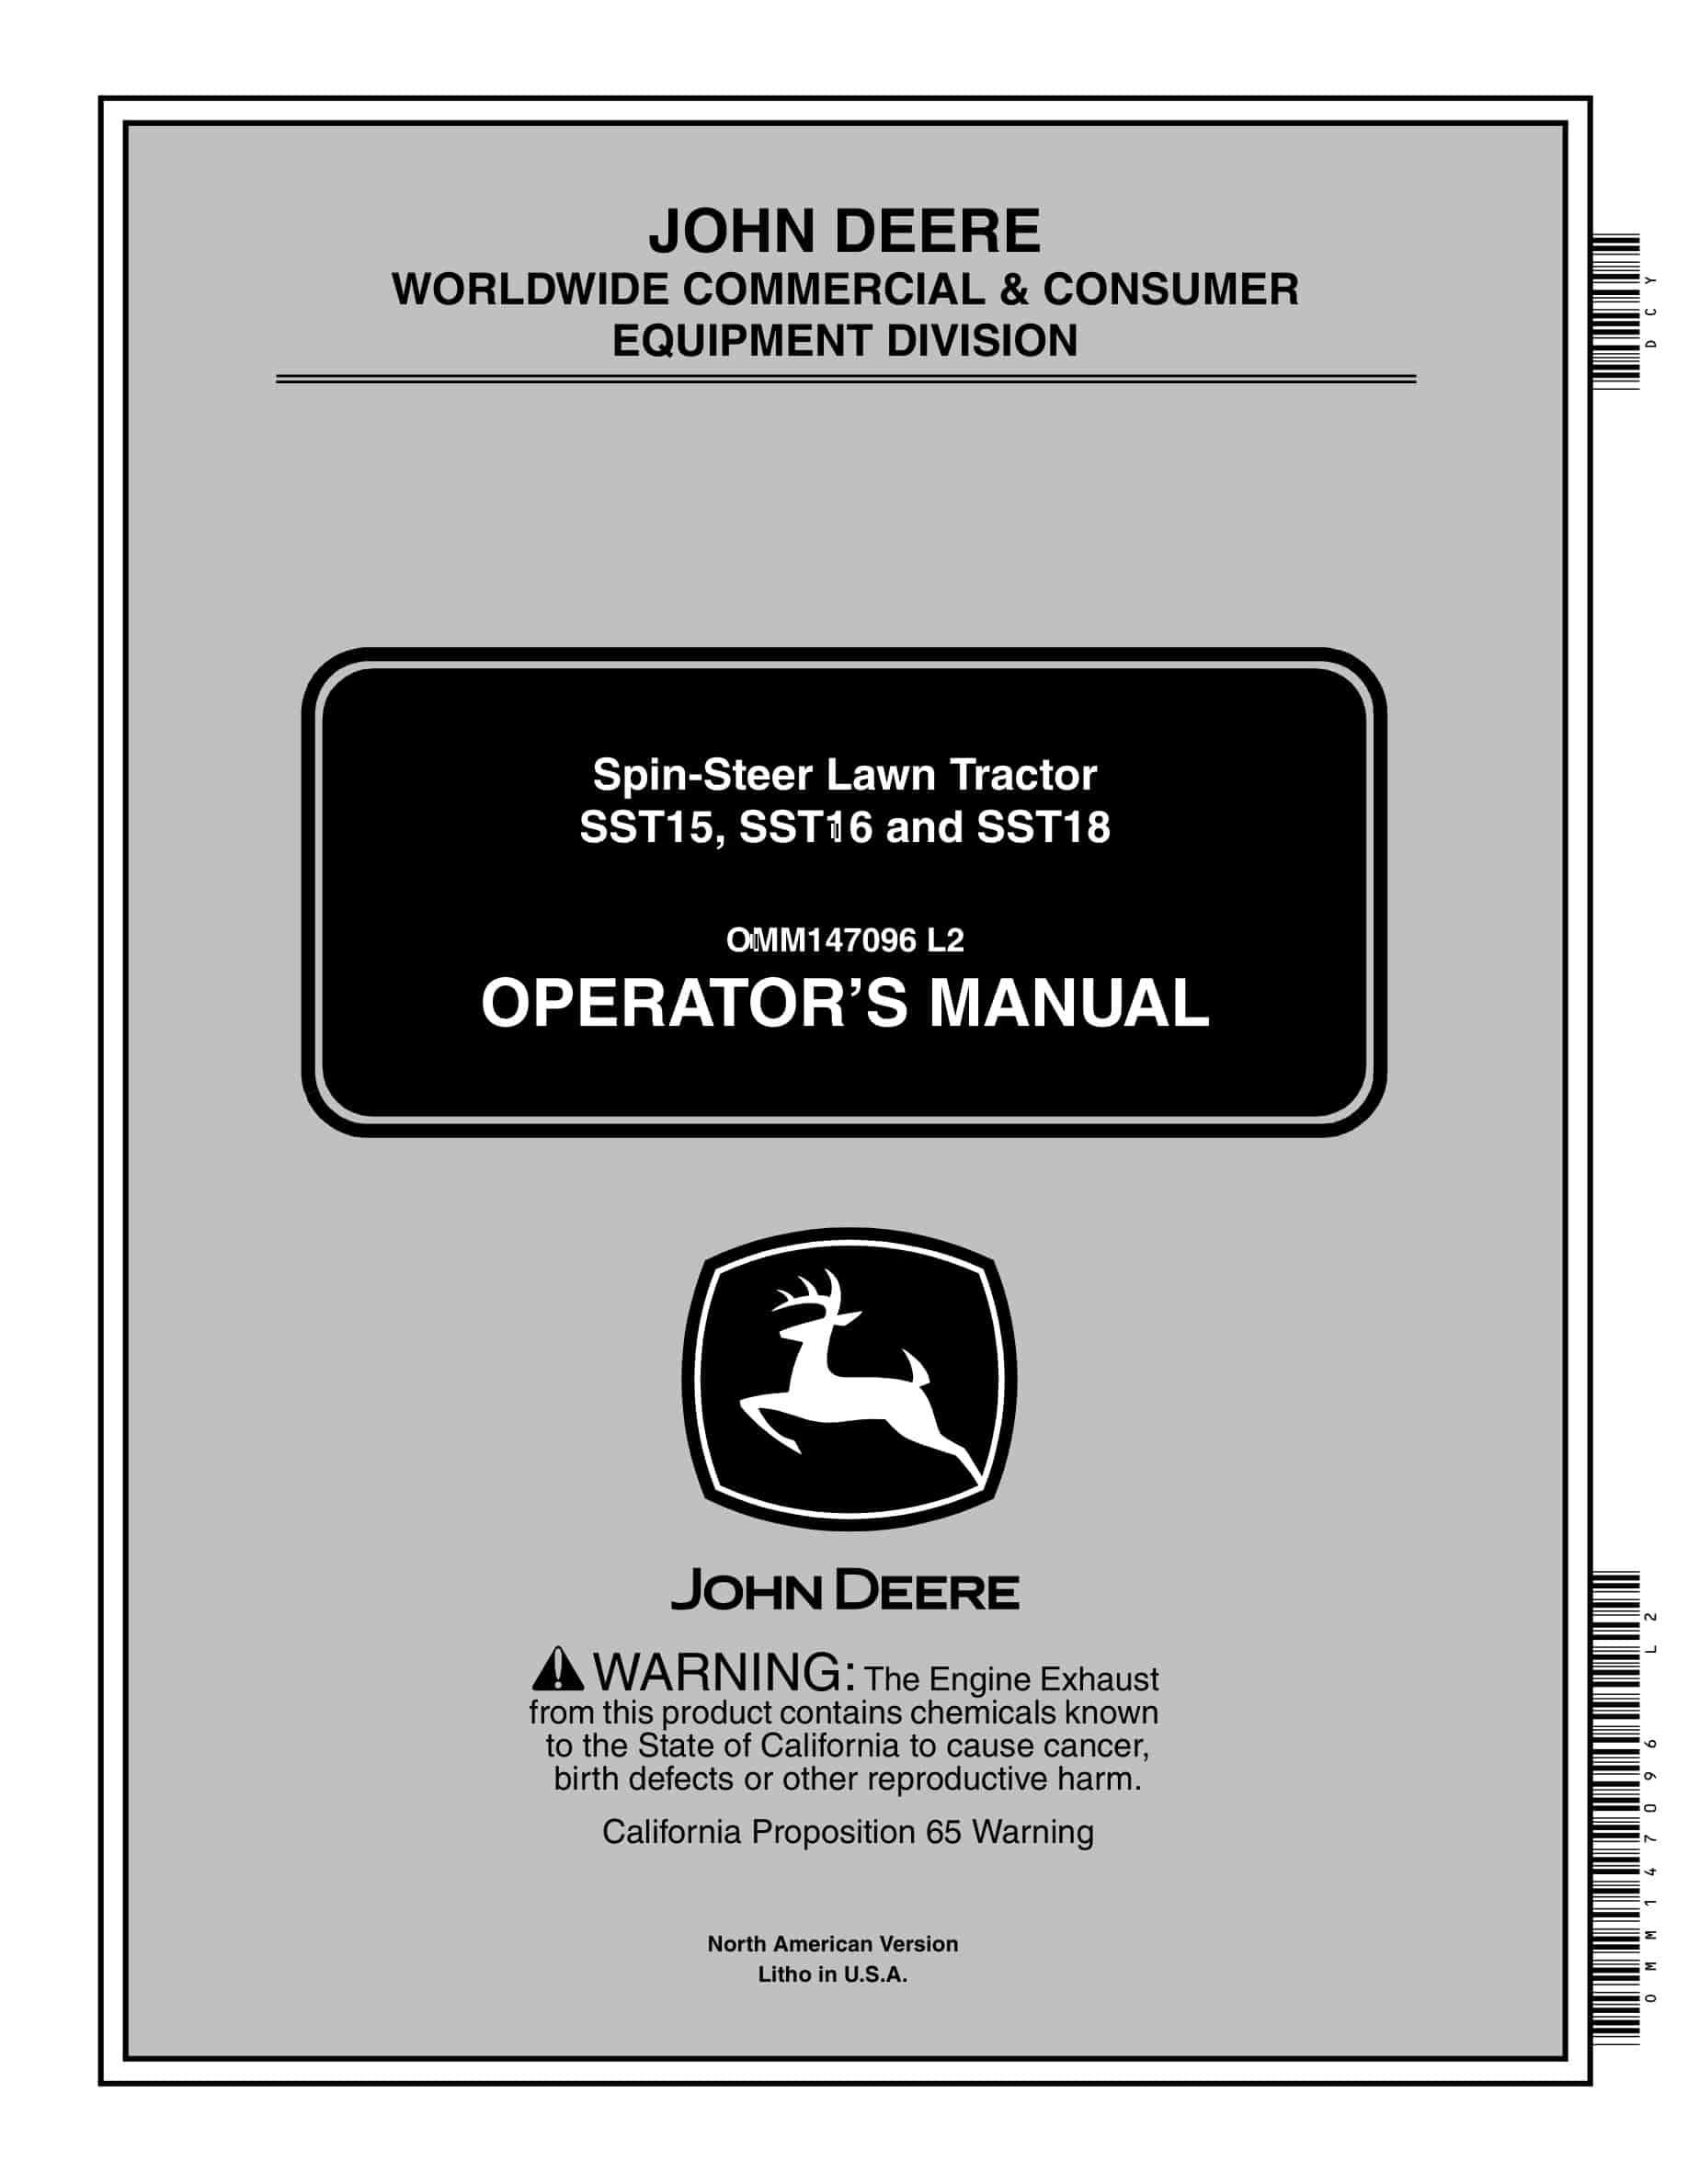 John Deere SST15, SST16 and SST18 Tractor Operator Manual OMM147096-1